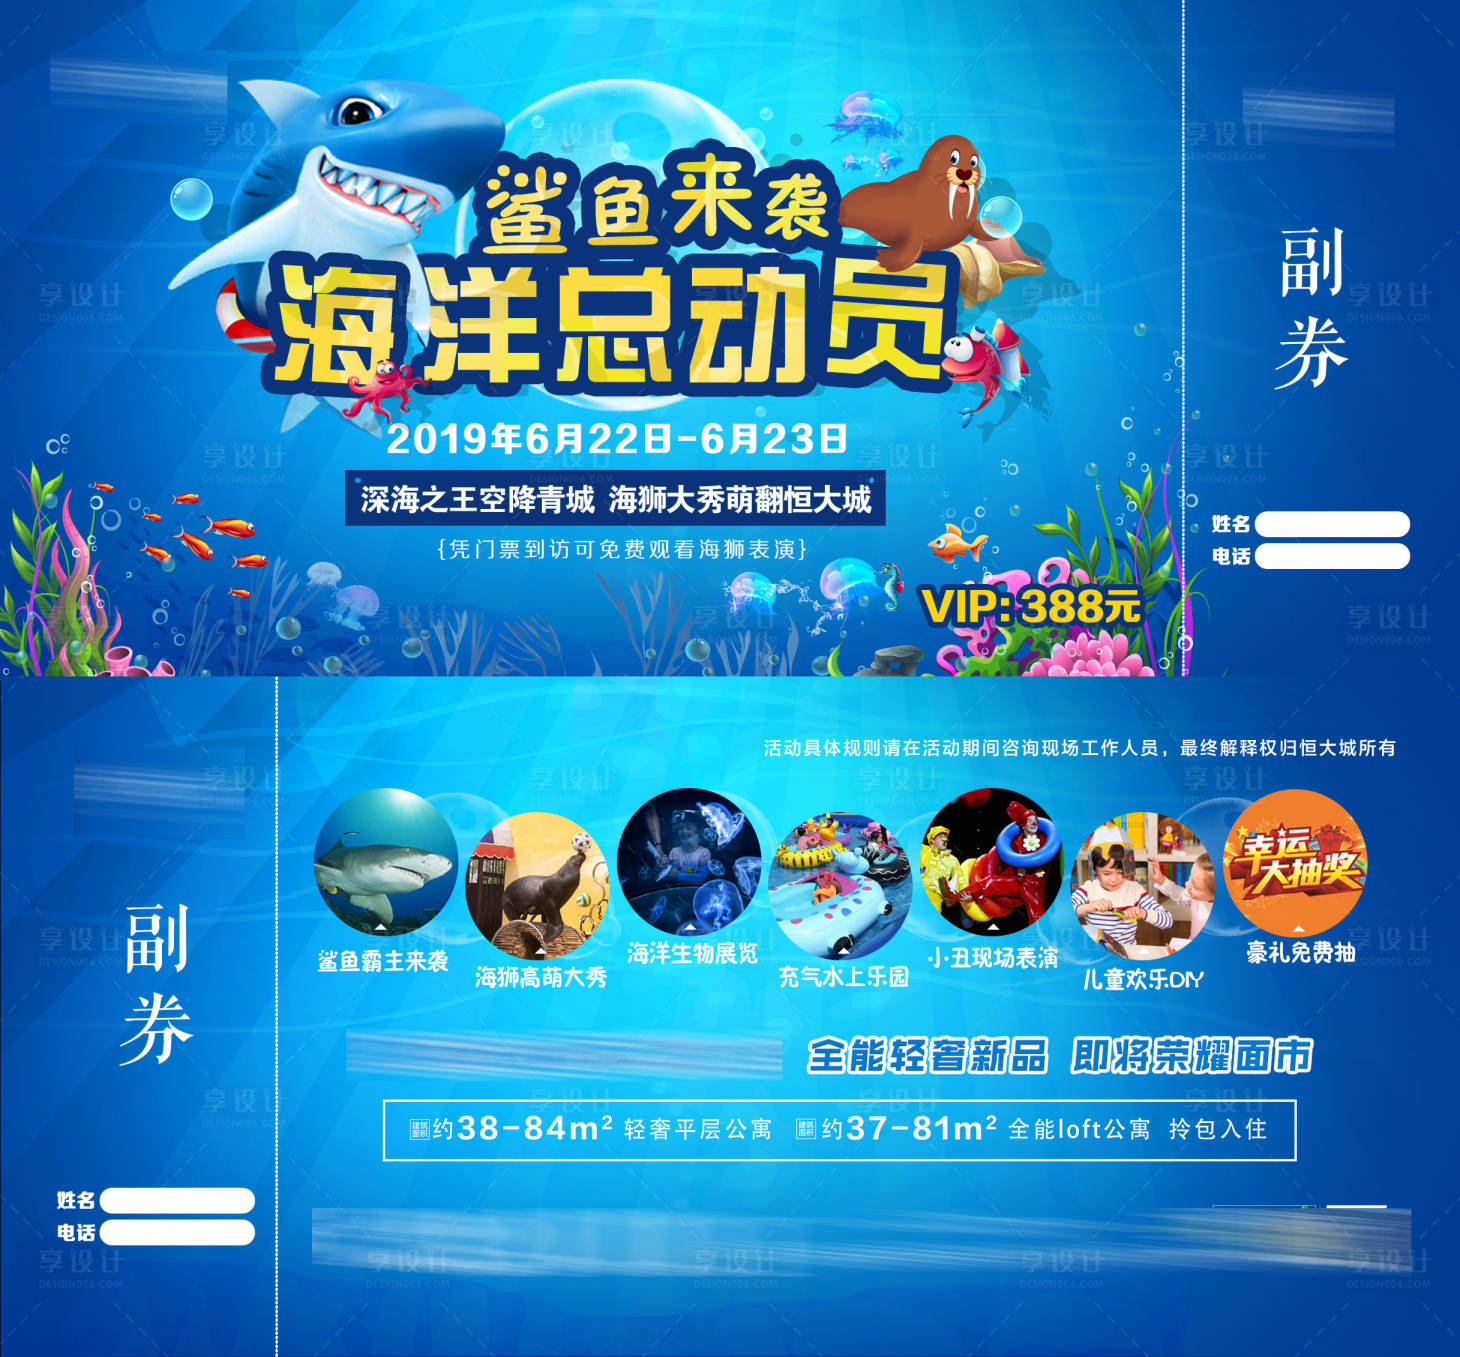 Hai Chang Ocean Park Map